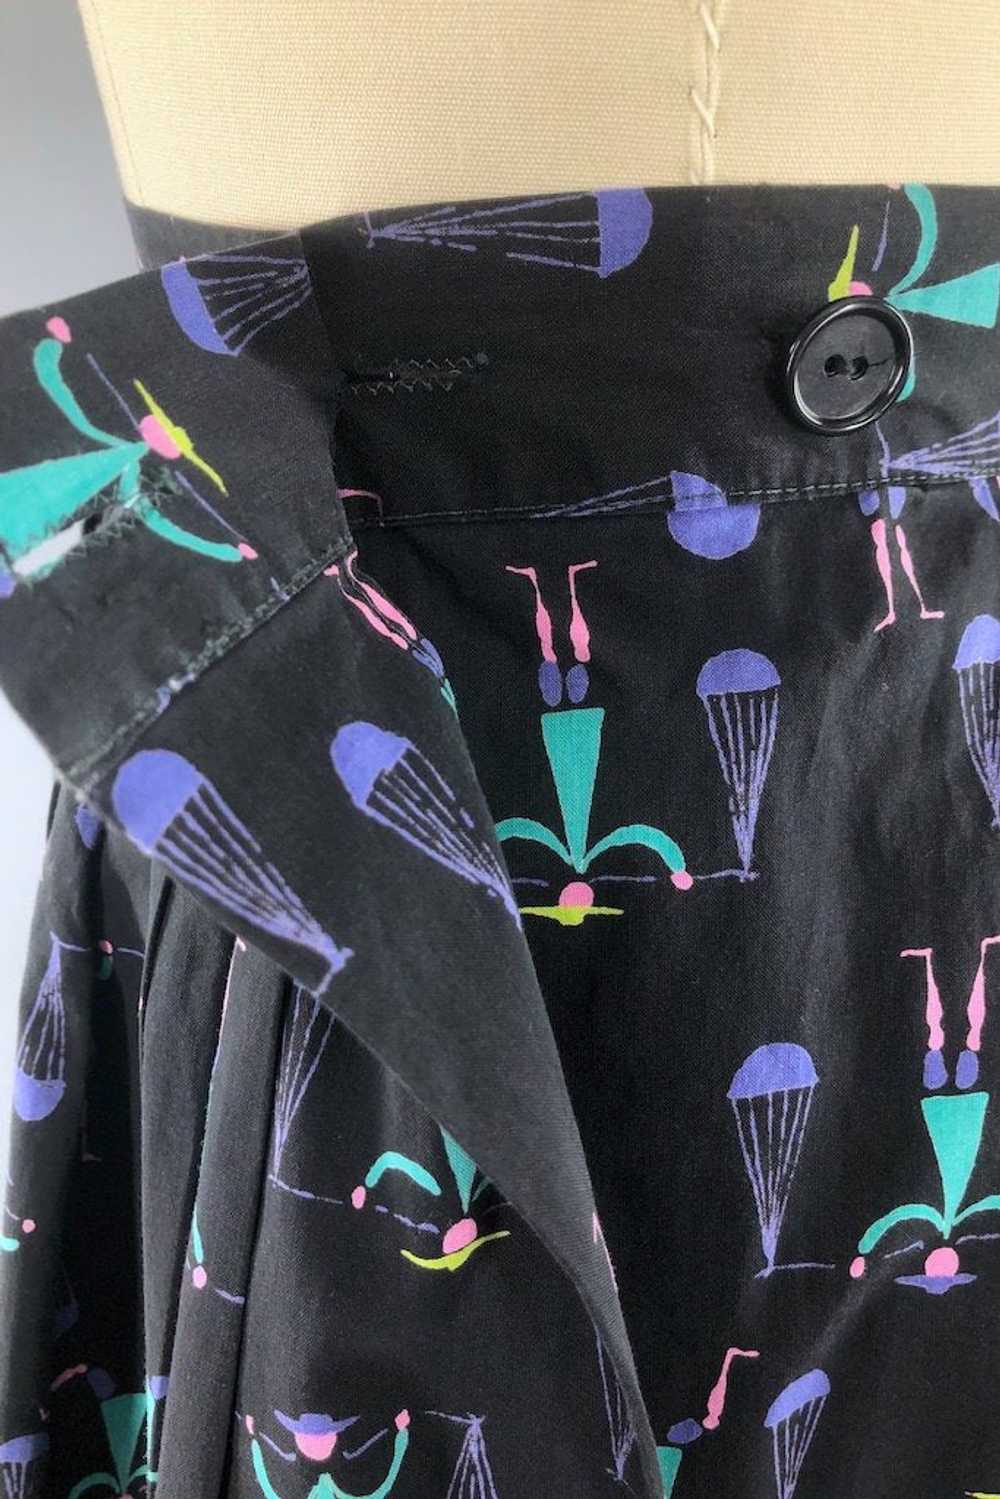 Vintage 1950s Novelty Print Skirt - image 4